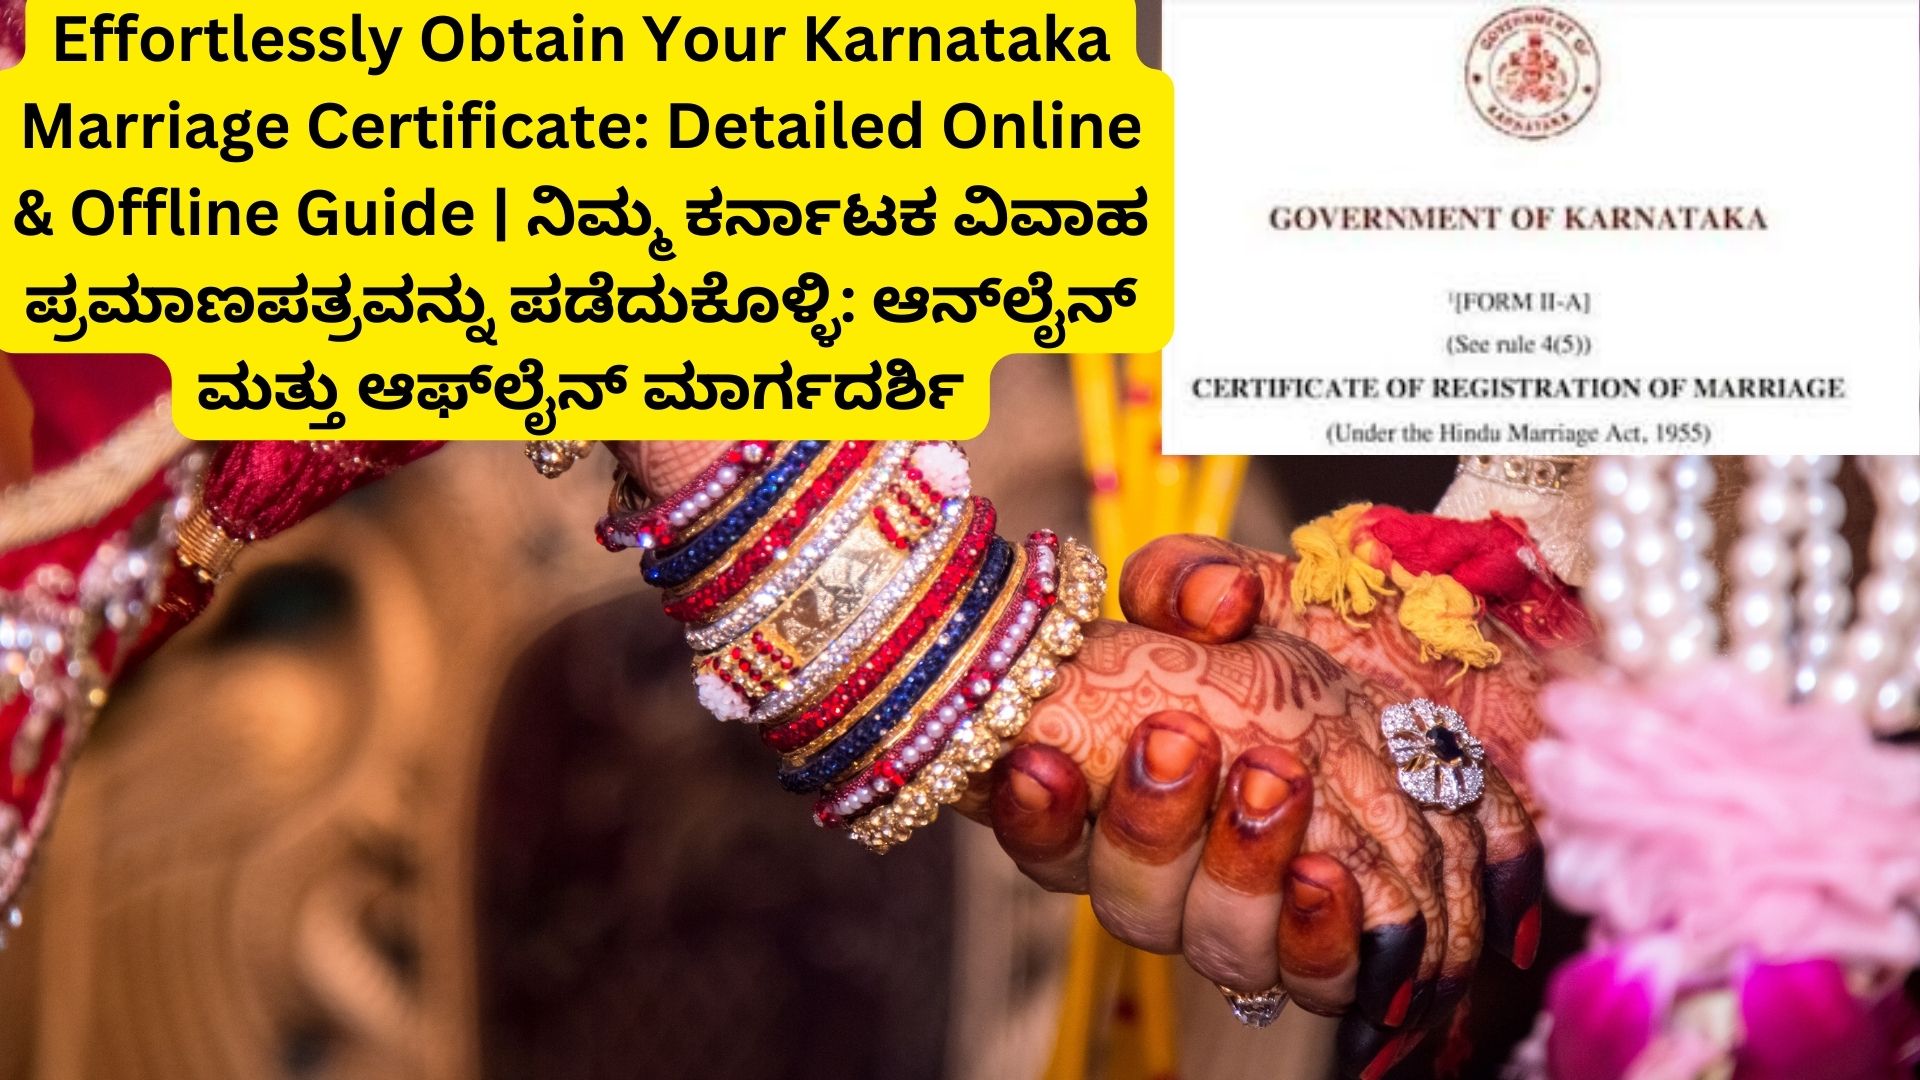 Effortlessly Obtain Your Karnataka Marriage Certificate: Detailed Online & Offline Guide | ನಿಮ್ಮ ಕರ್ನಾಟಕ ವಿವಾಹ ಪ್ರಮಾಣಪತ್ರವನ್ನು ಪಡೆದುಕೊಳ್ಳಿ: ಆನ್‌ಲೈನ್ ಮತ್ತು ಆಫ್‌ಲೈನ್ ಮಾರ್ಗದರ್ಶಿ